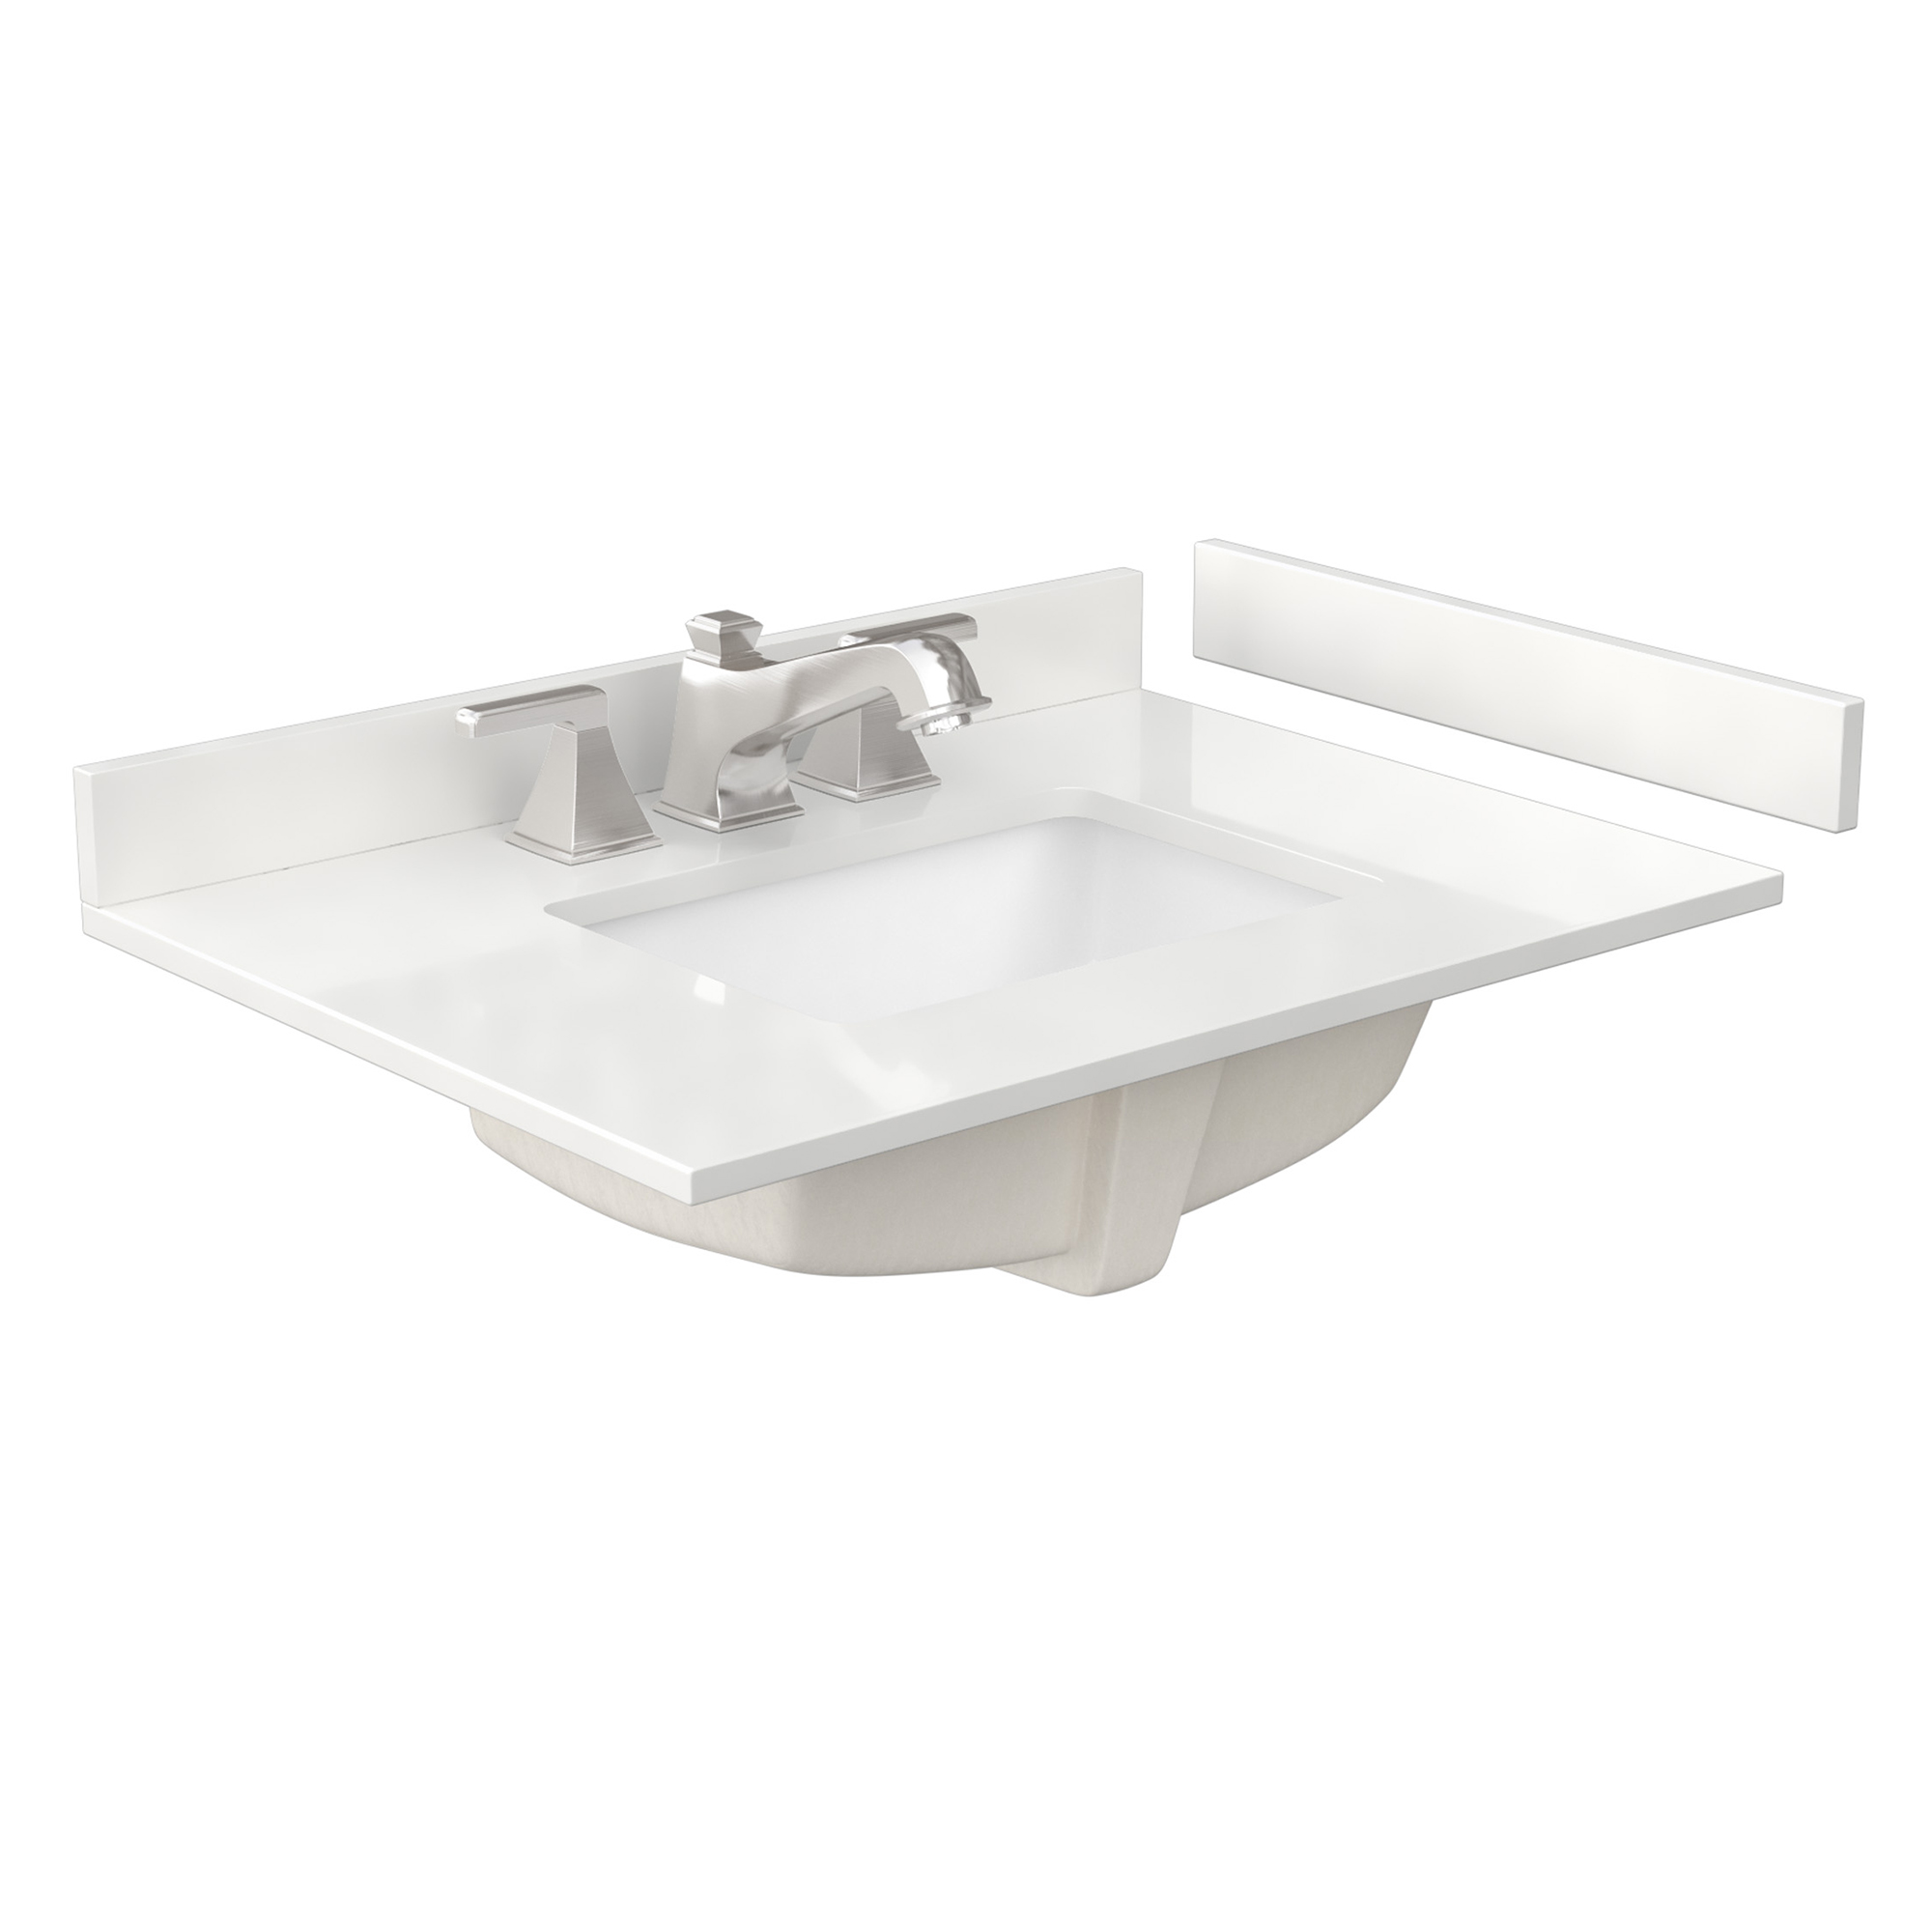 30" Single Countertop - White Quartz (1000) with Undermount Square Sink (3-Hole) - Includes Backsplash and Sidesplash WCFQC330STOPUNSWQ